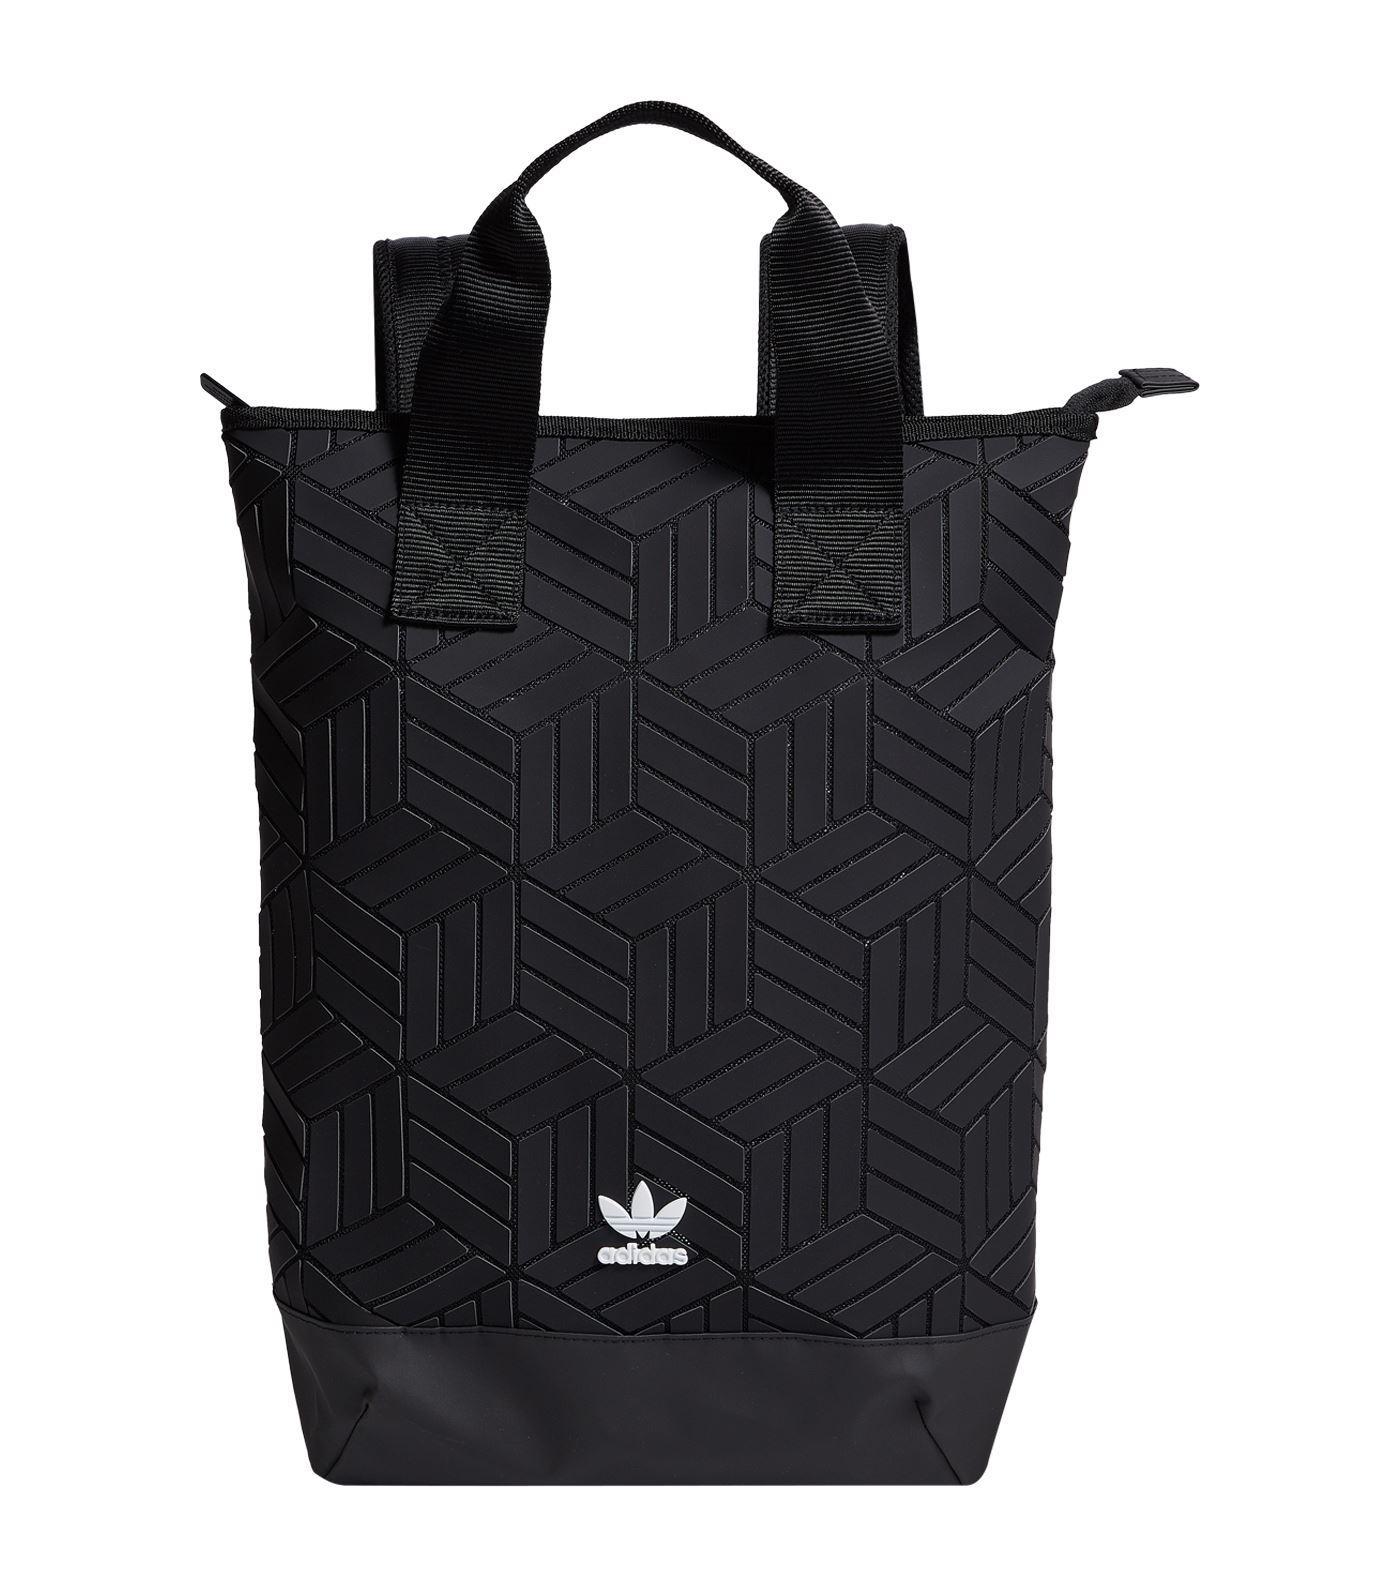 adidas Originals 3d Geometric Backpack in Black - Lyst